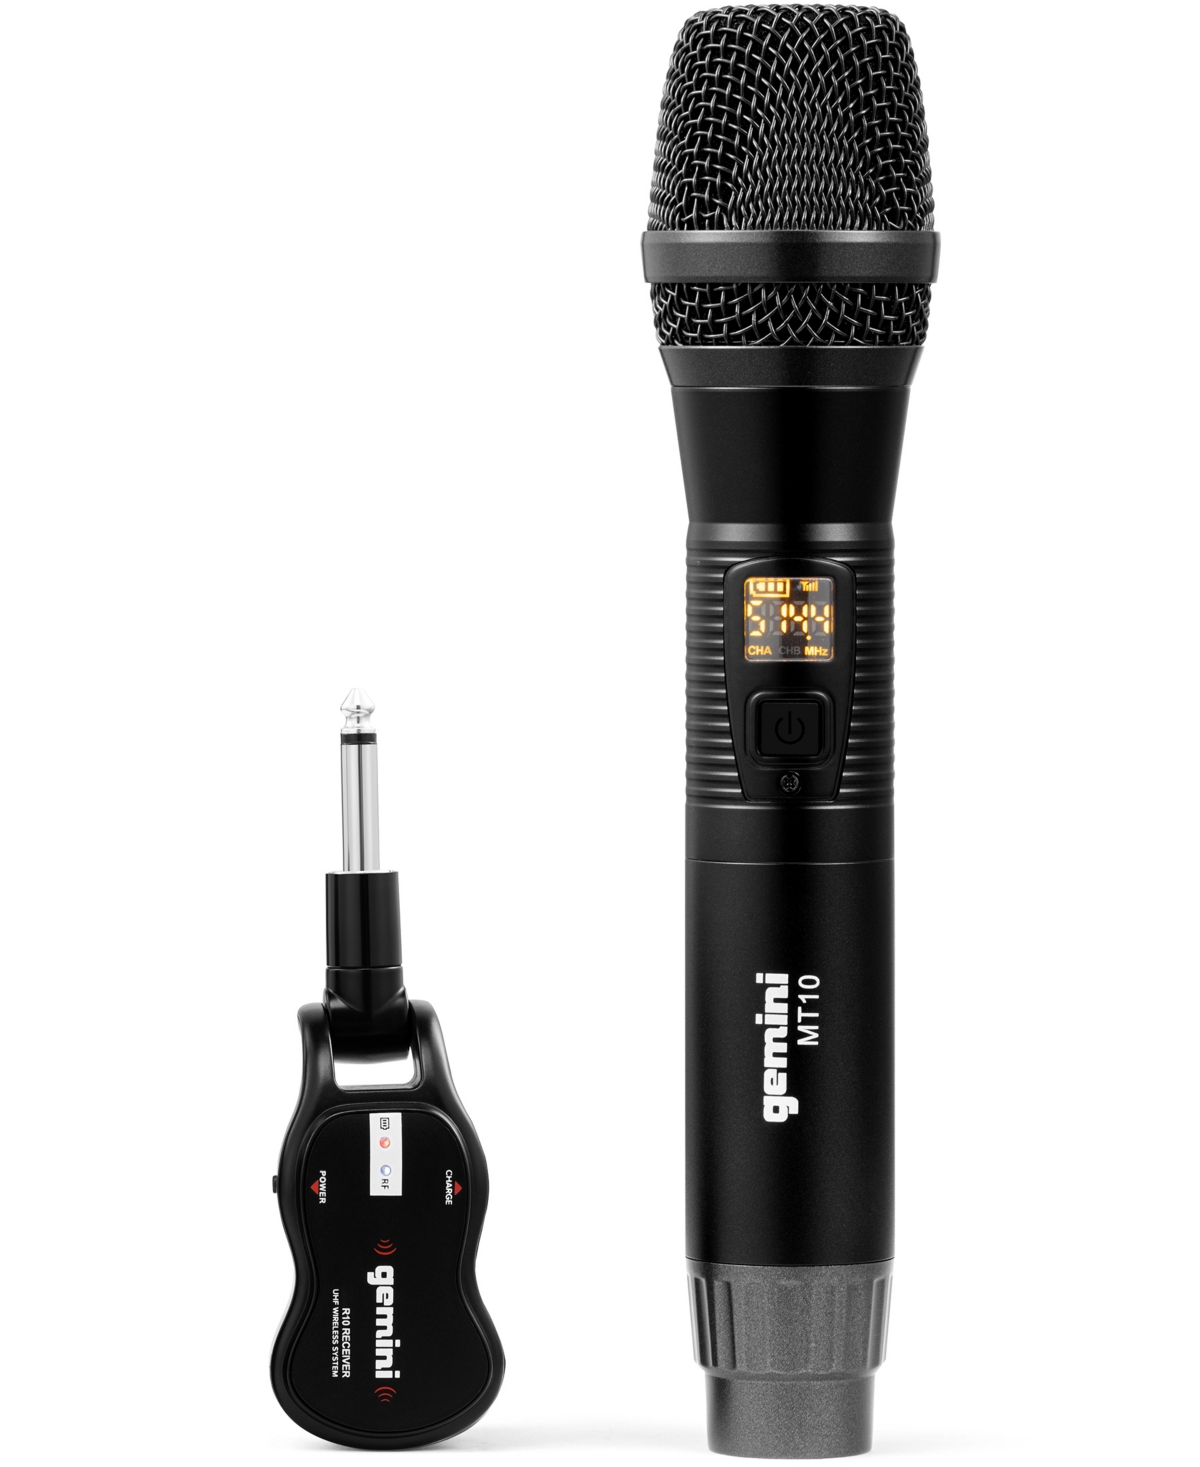 Gemini Single Handheld Wireless Uhf Microphone System In Black